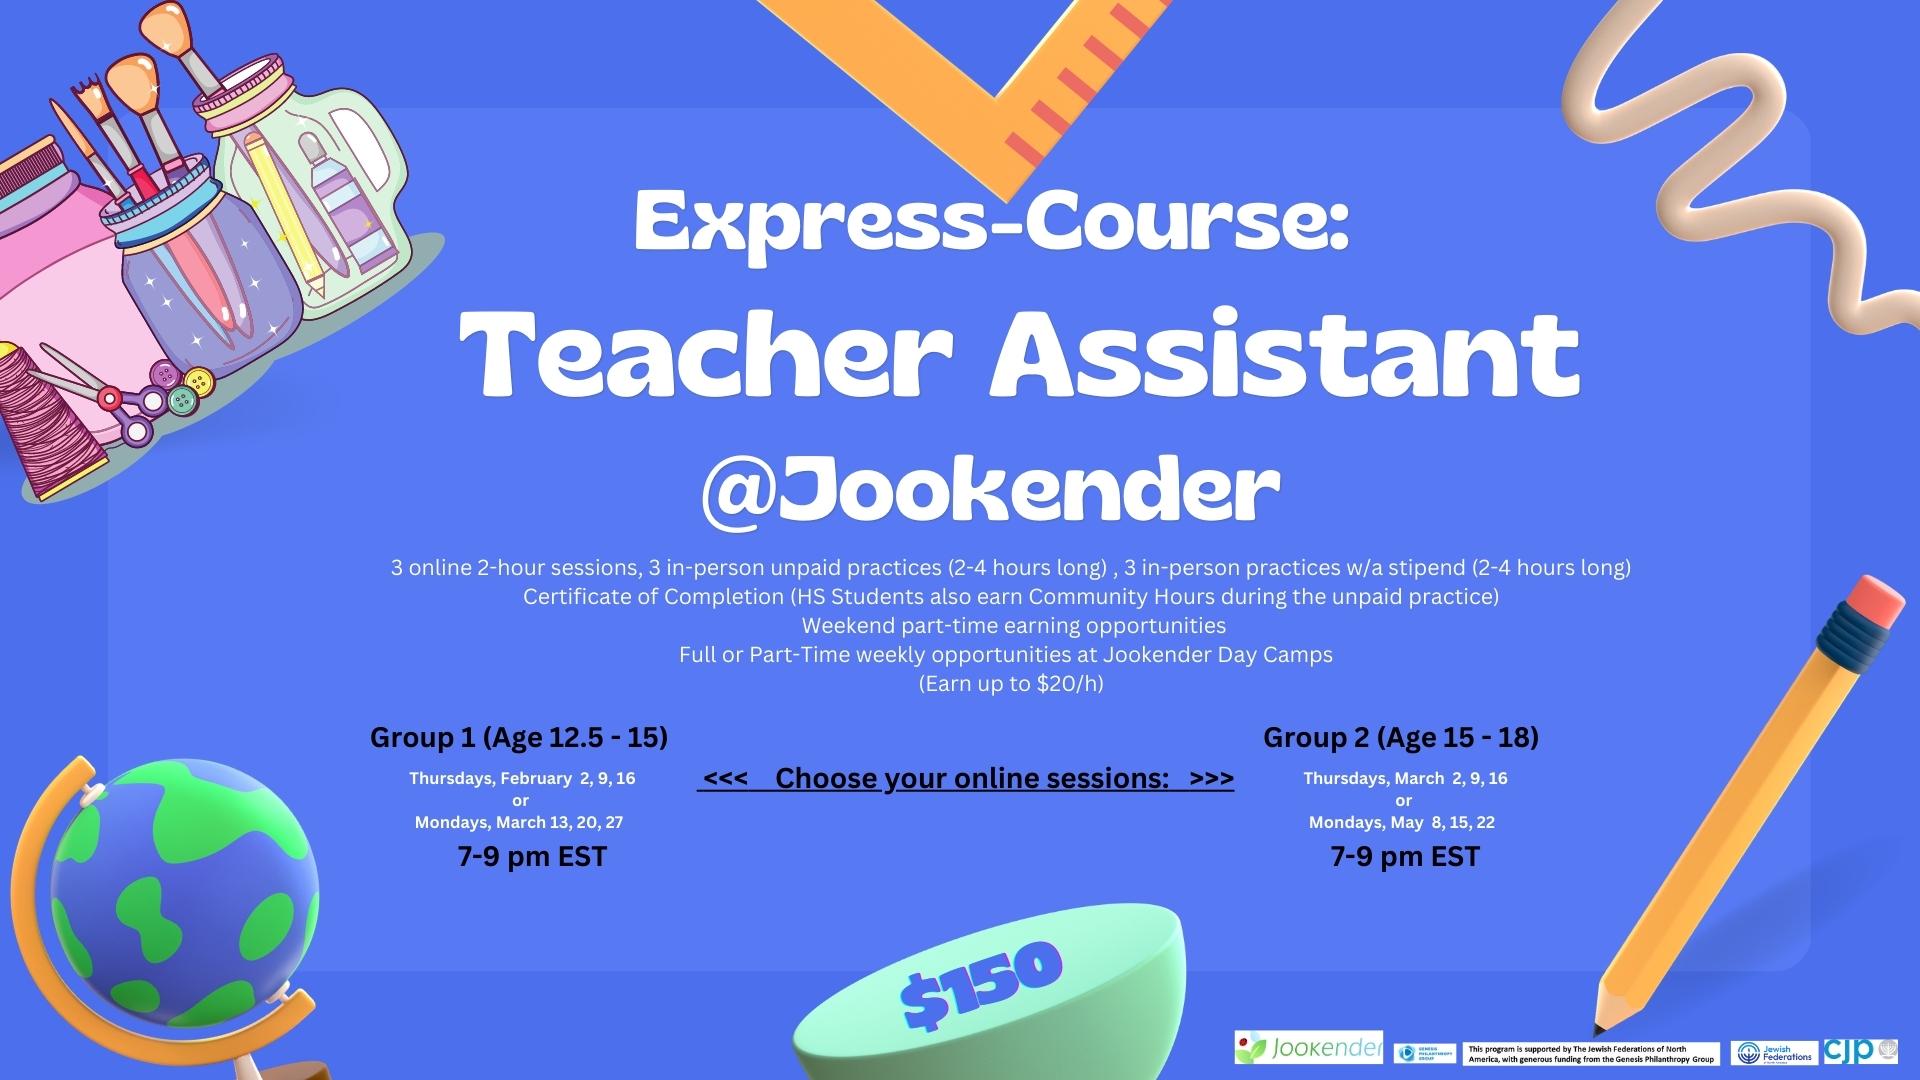 Express-Course: Teacher Assistant